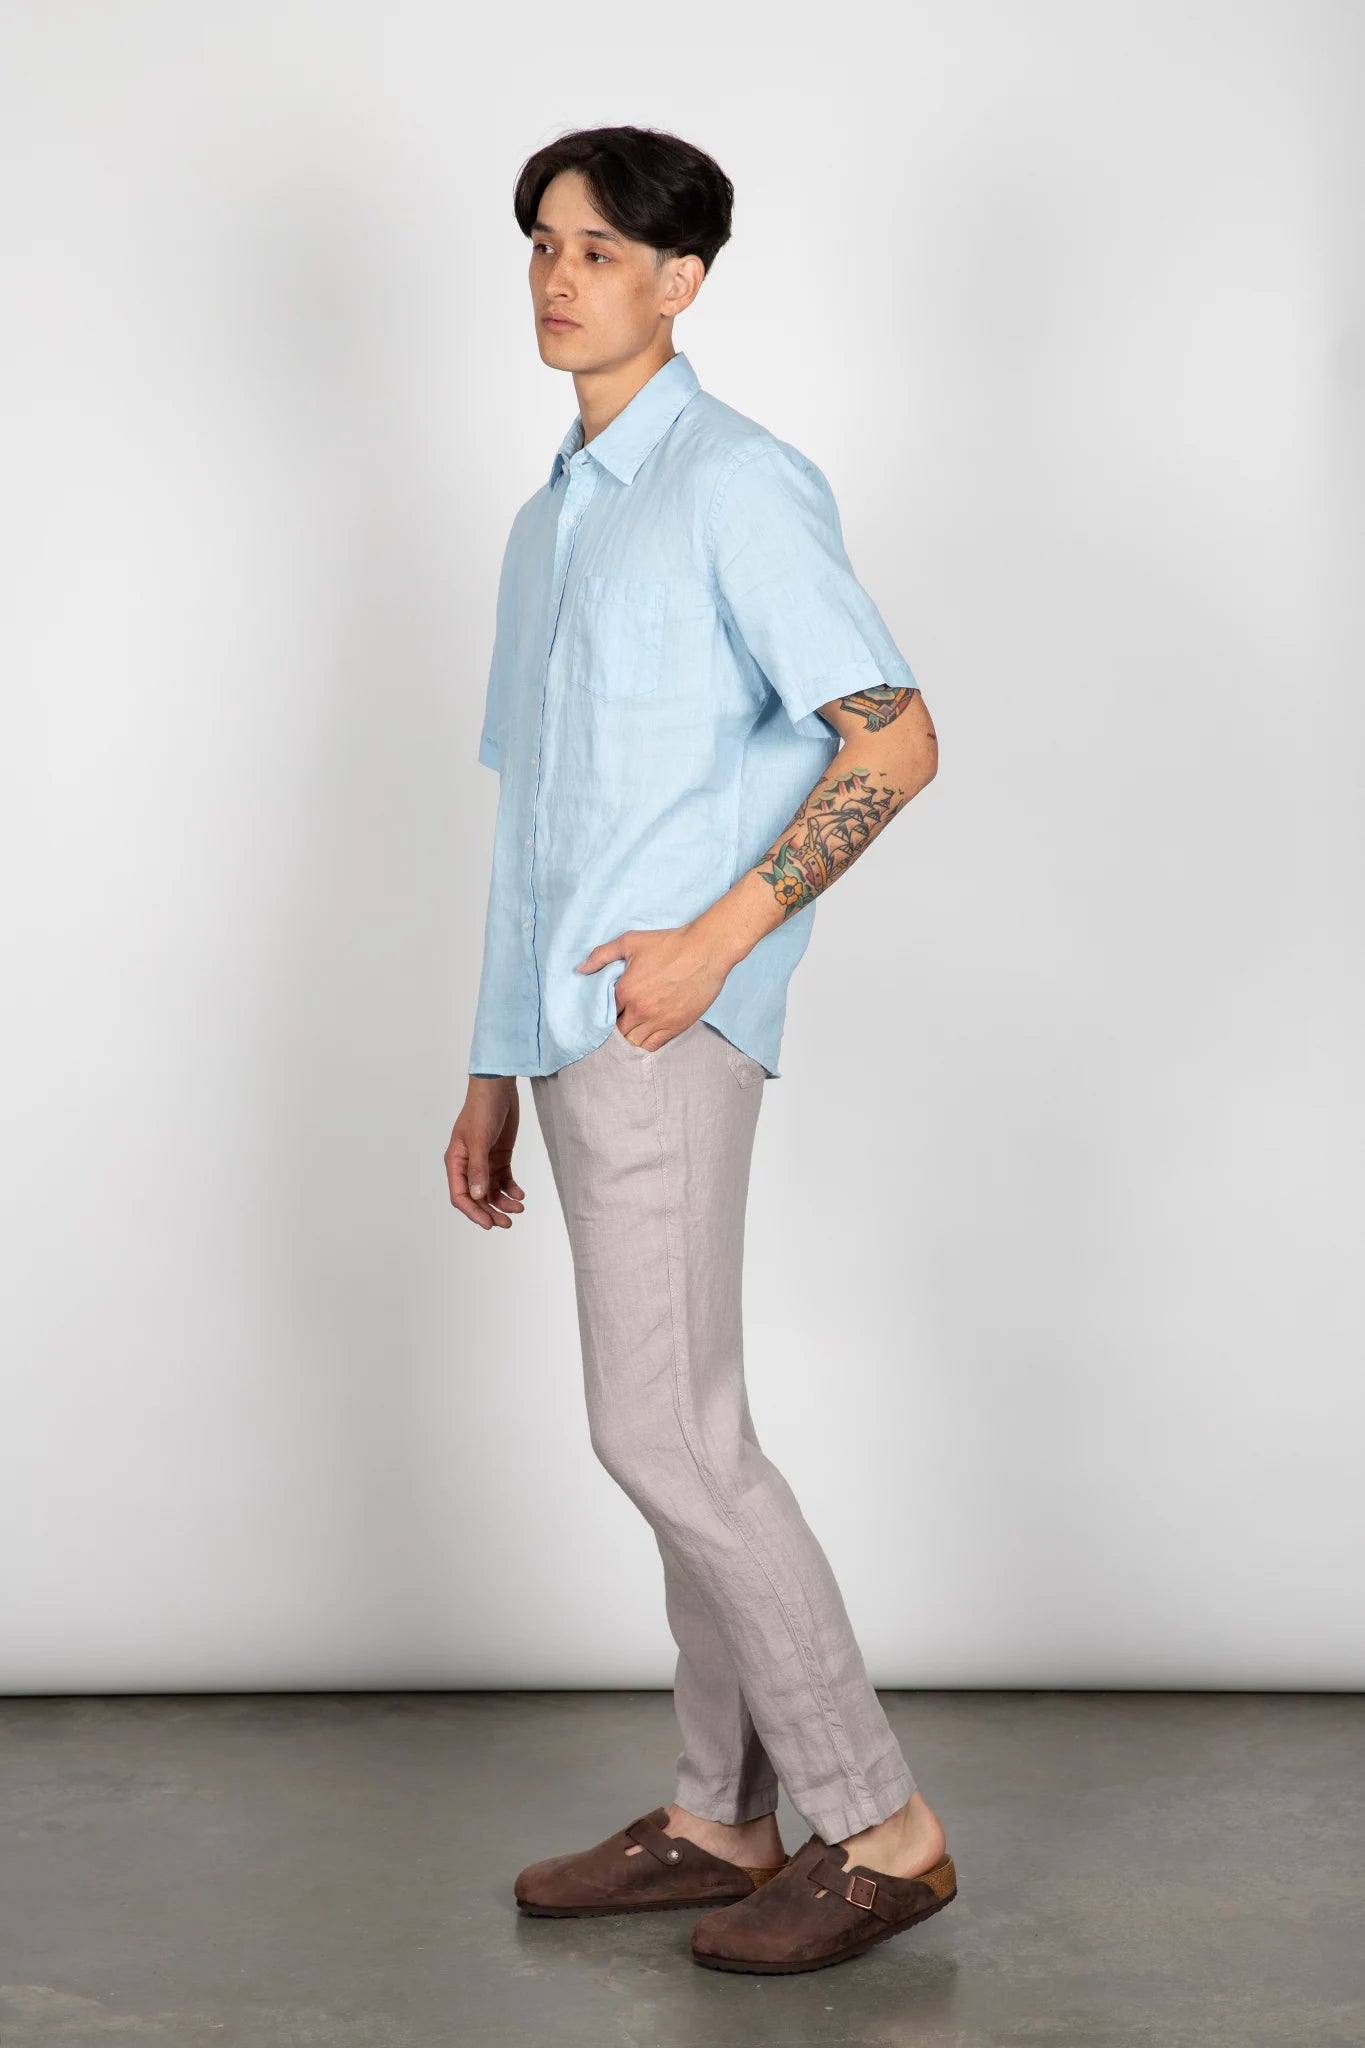 Miami Short Sleeve Linen Shirt Shirts Benson Apparel   